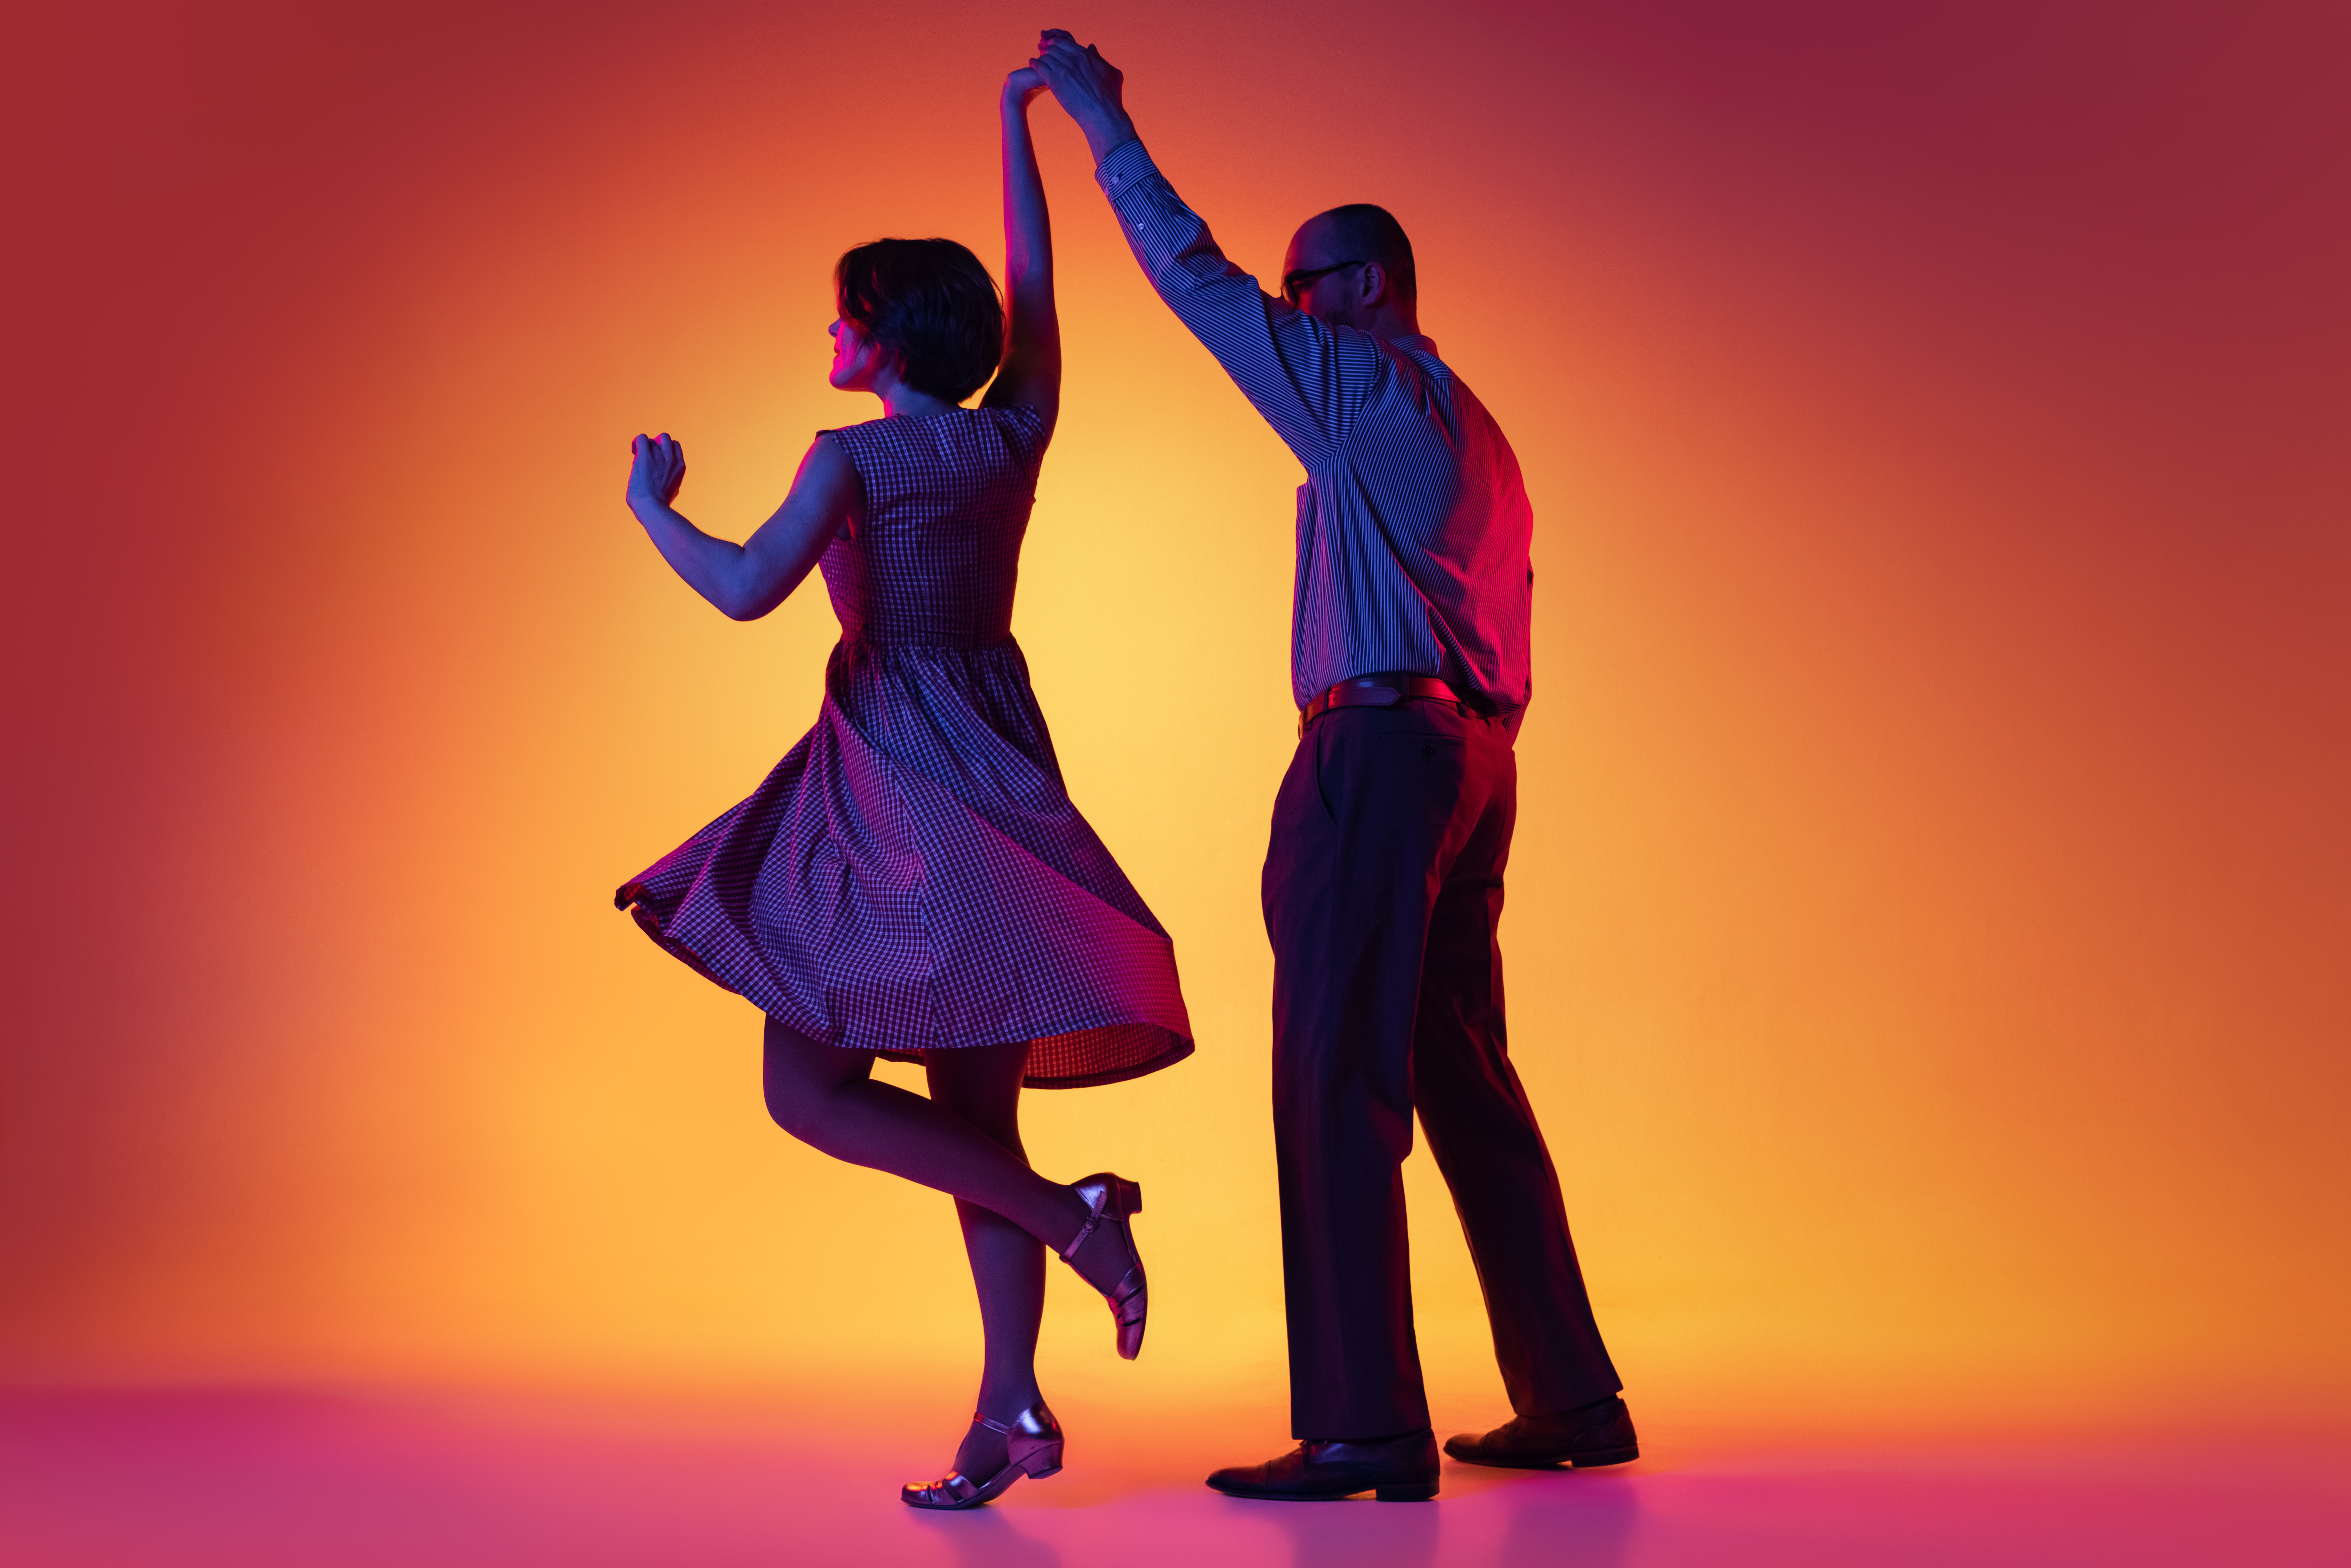 portrait-of-artistic-couple-dancing-retro-style-dance-isolated-over-gradient-orange-yellow-background-in-neon-light.jpg